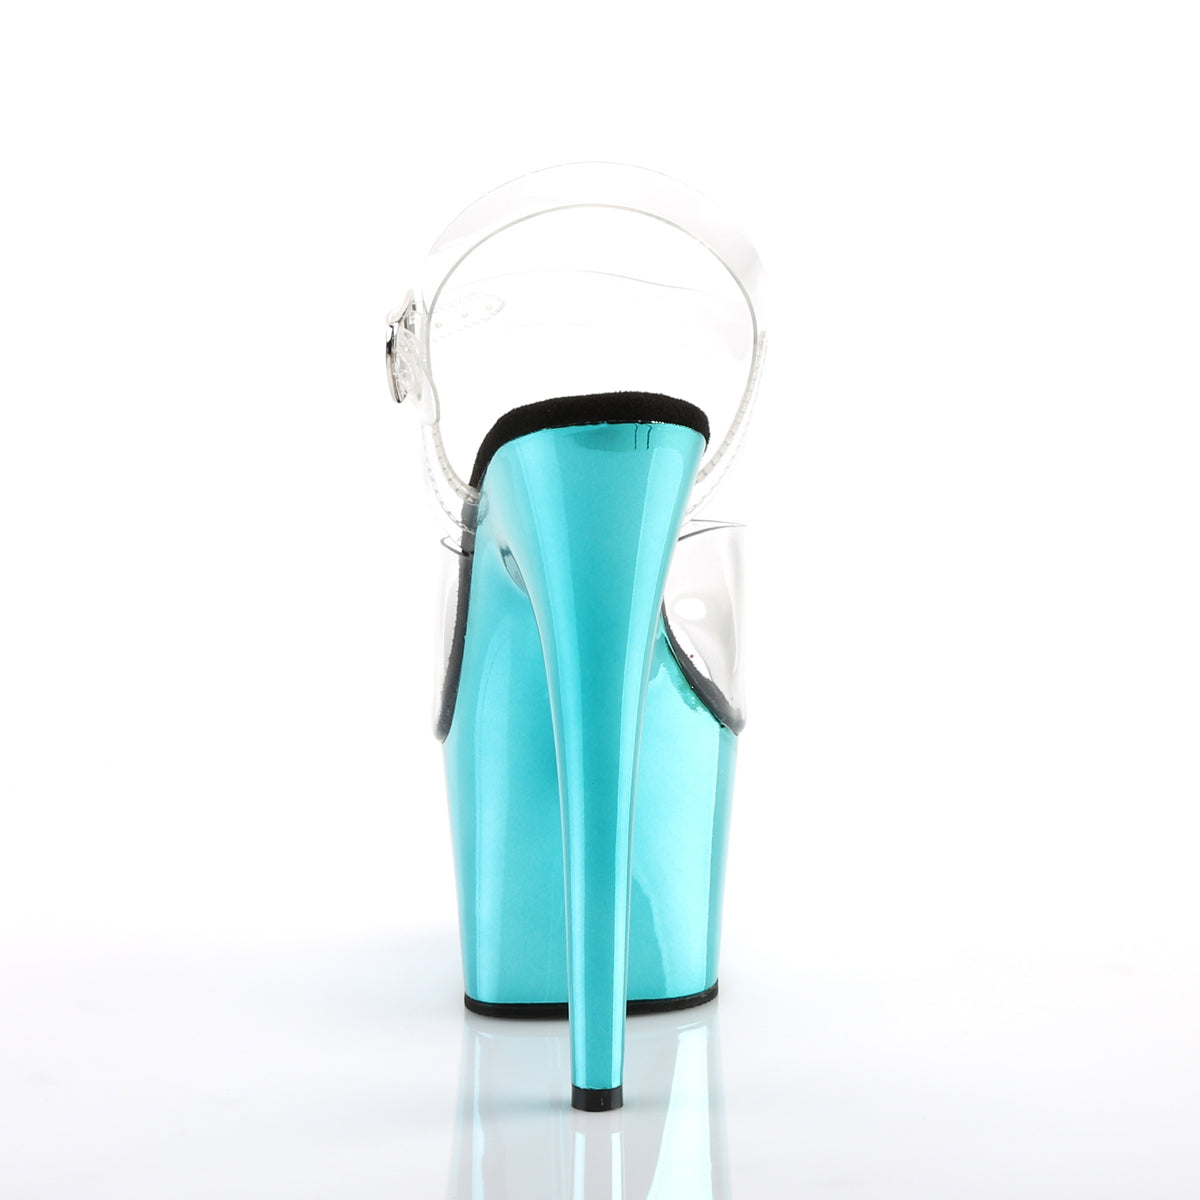 Pleaser Womens Sandals ADORE-708 Clr/Turquoise  Chrome